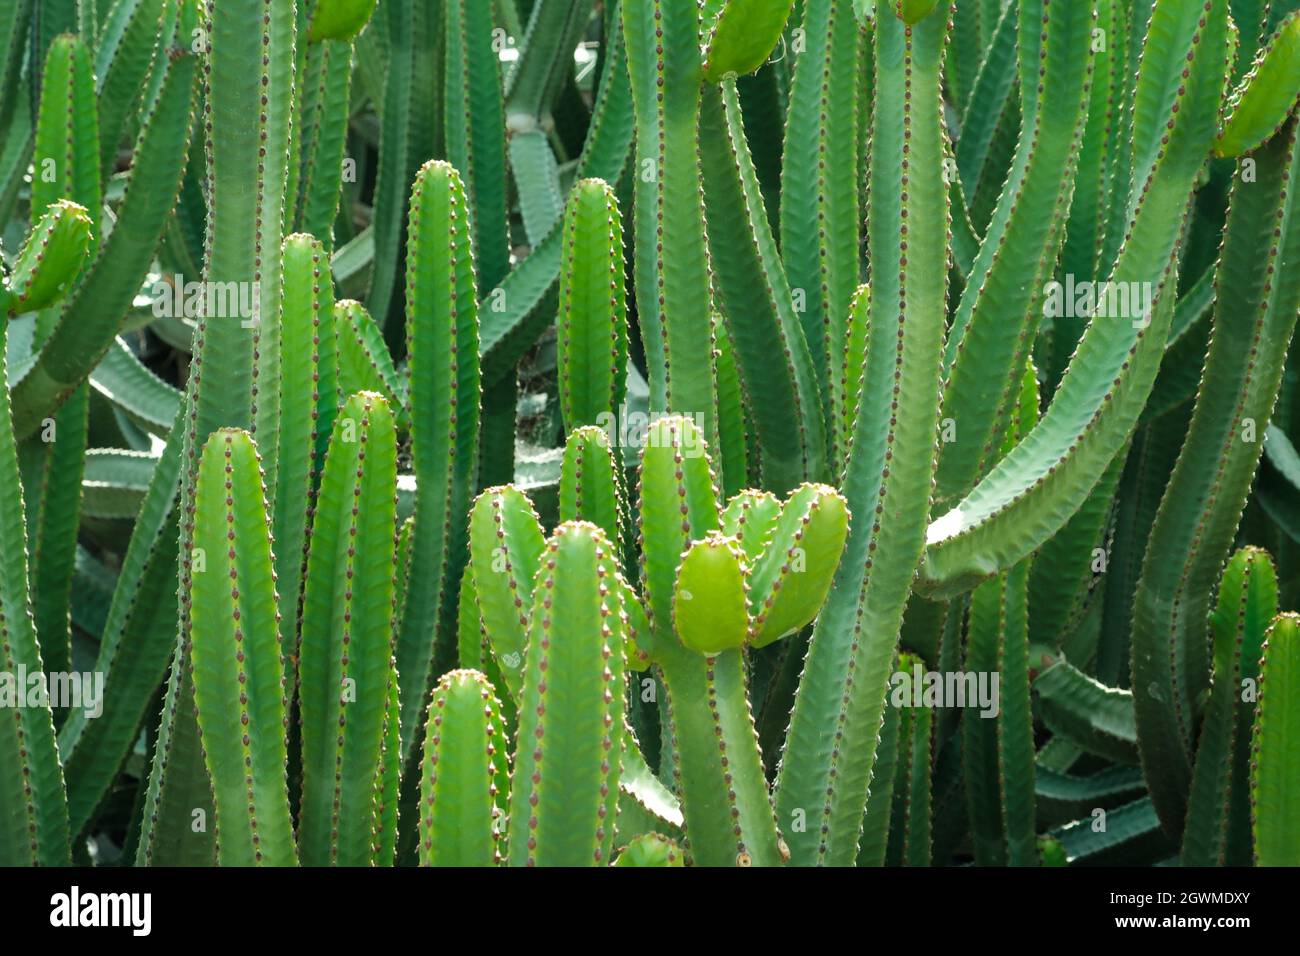 Cactus plant, Tenerife, Canary Islands Stock Photo